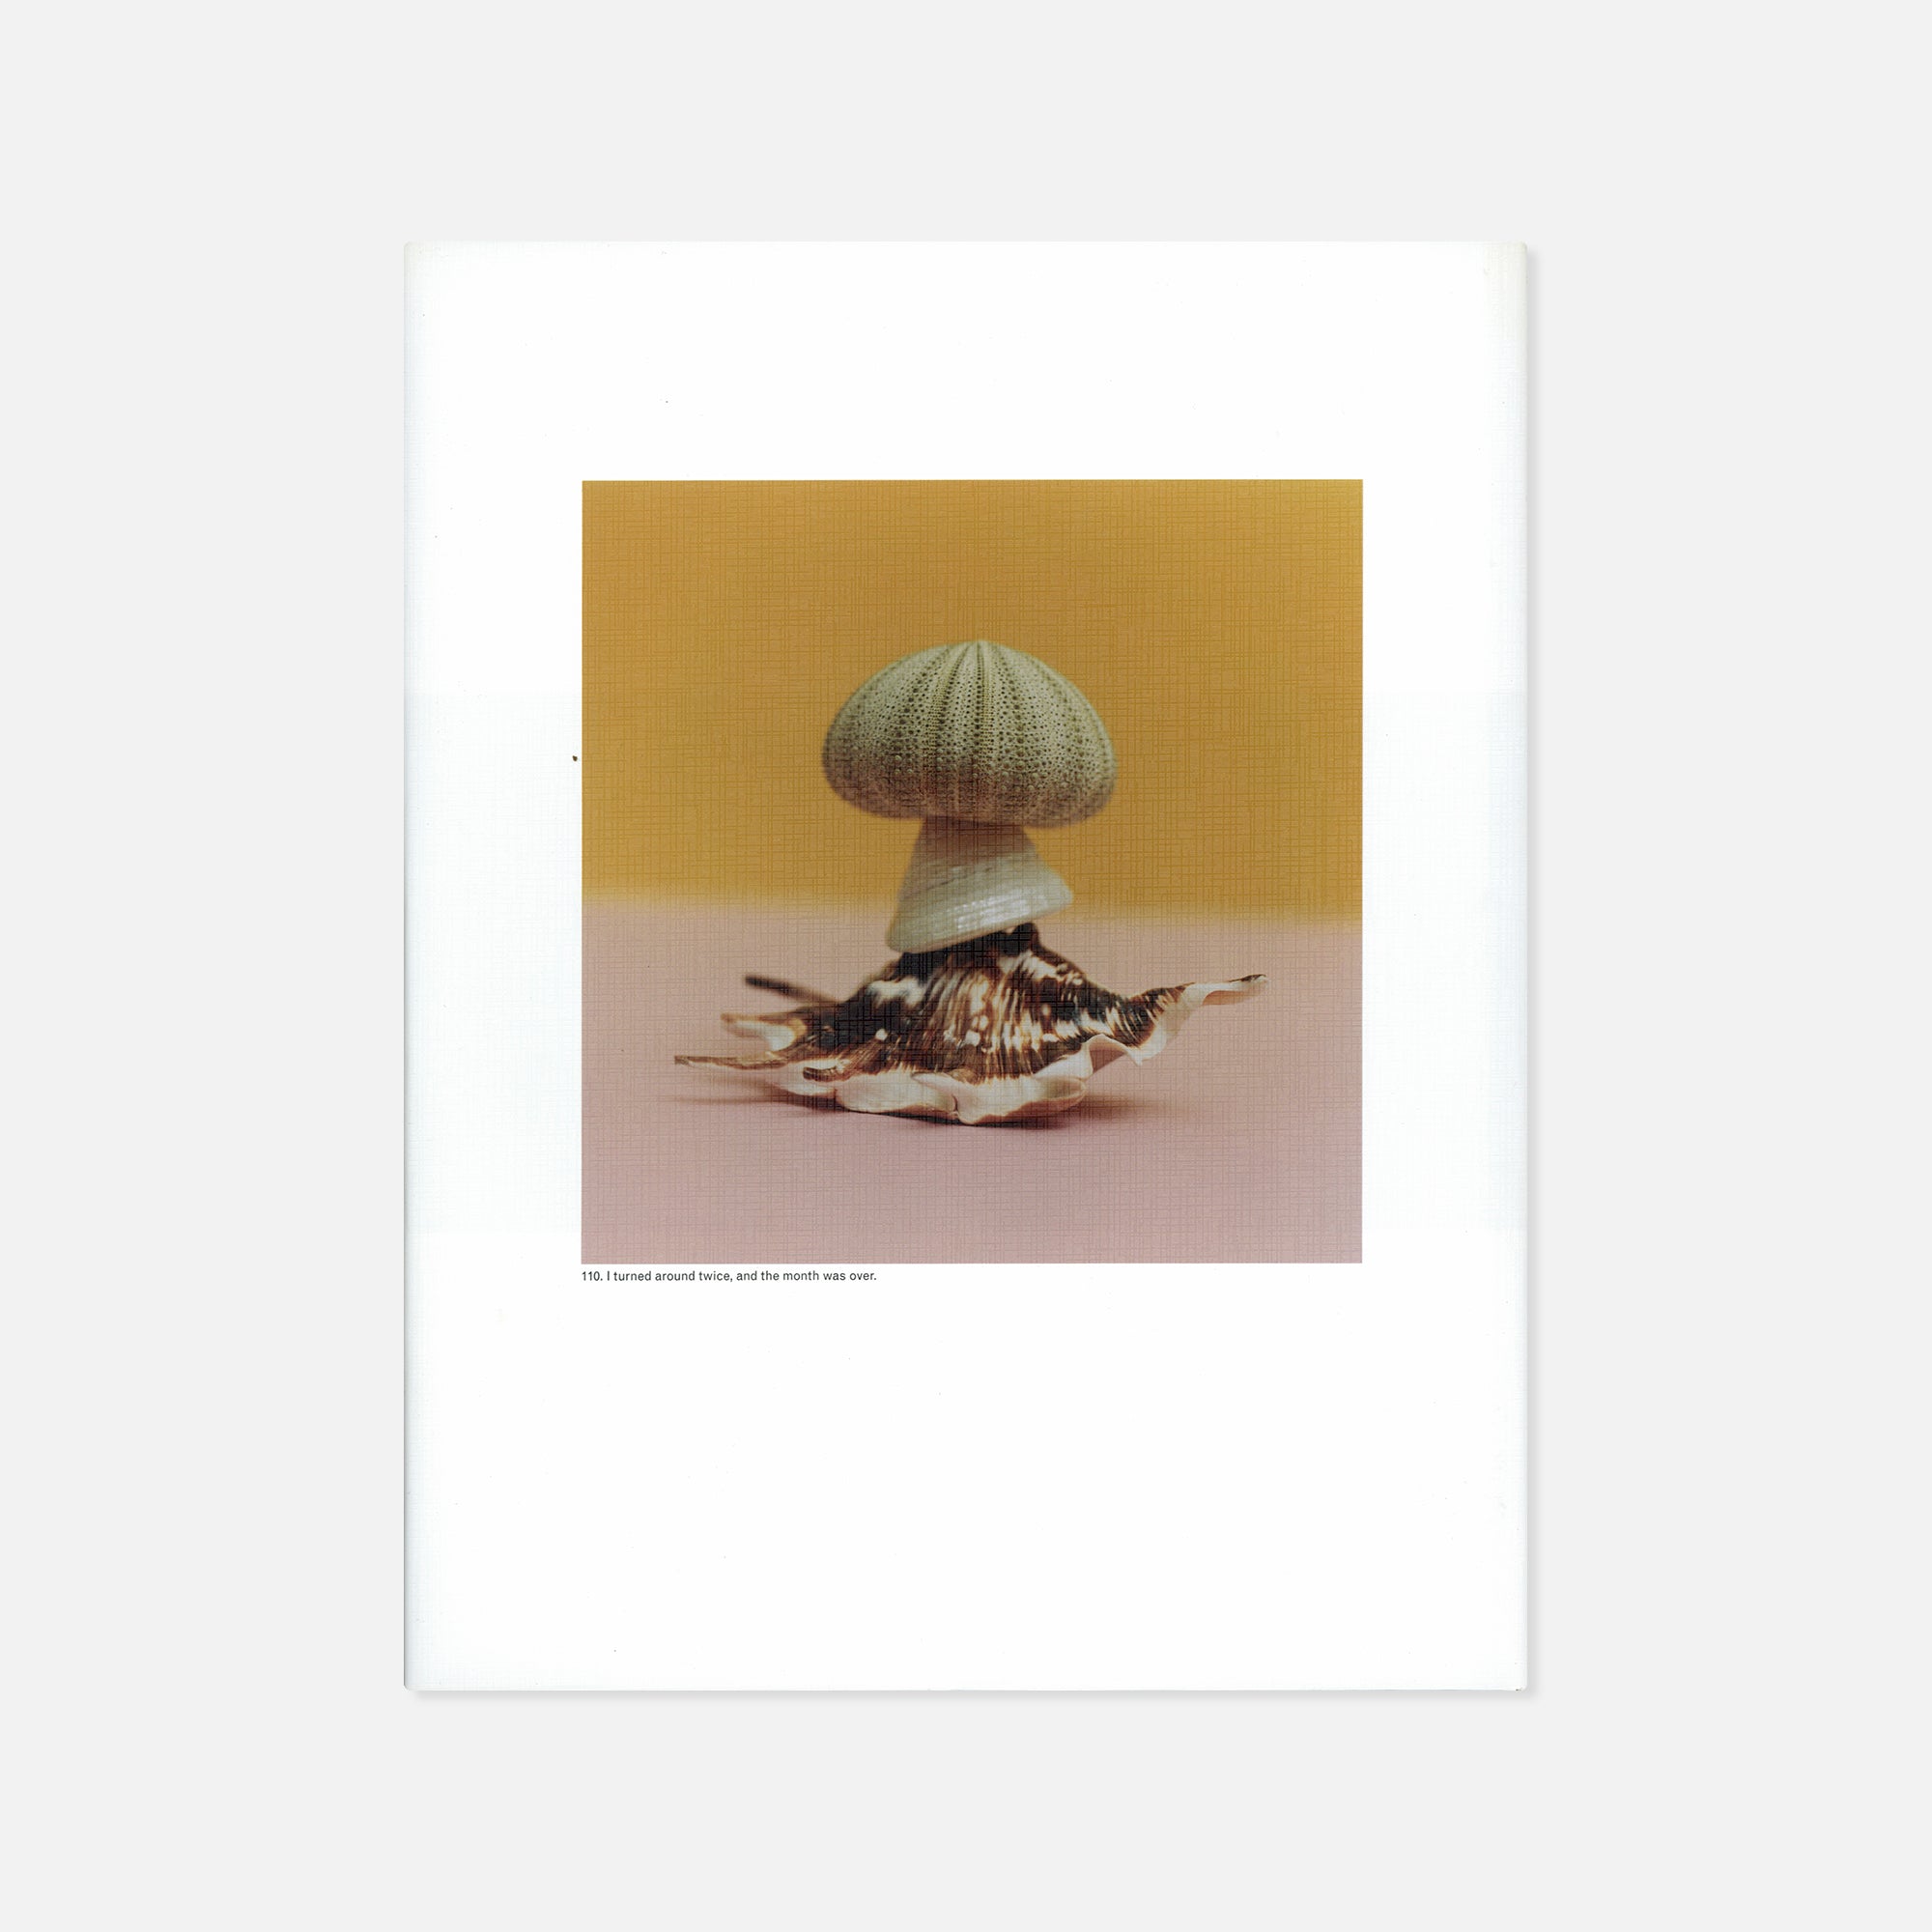 Jason Fulford — The Mushroom Collector